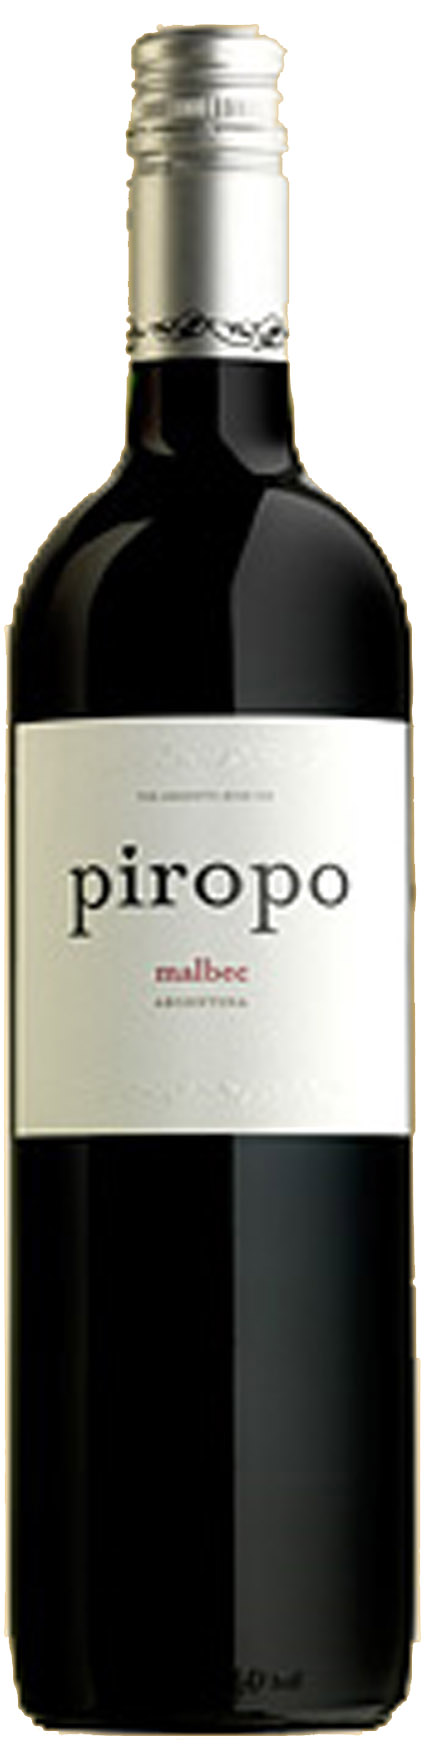 Piropo Malbec ( Argento Wine ) 2009